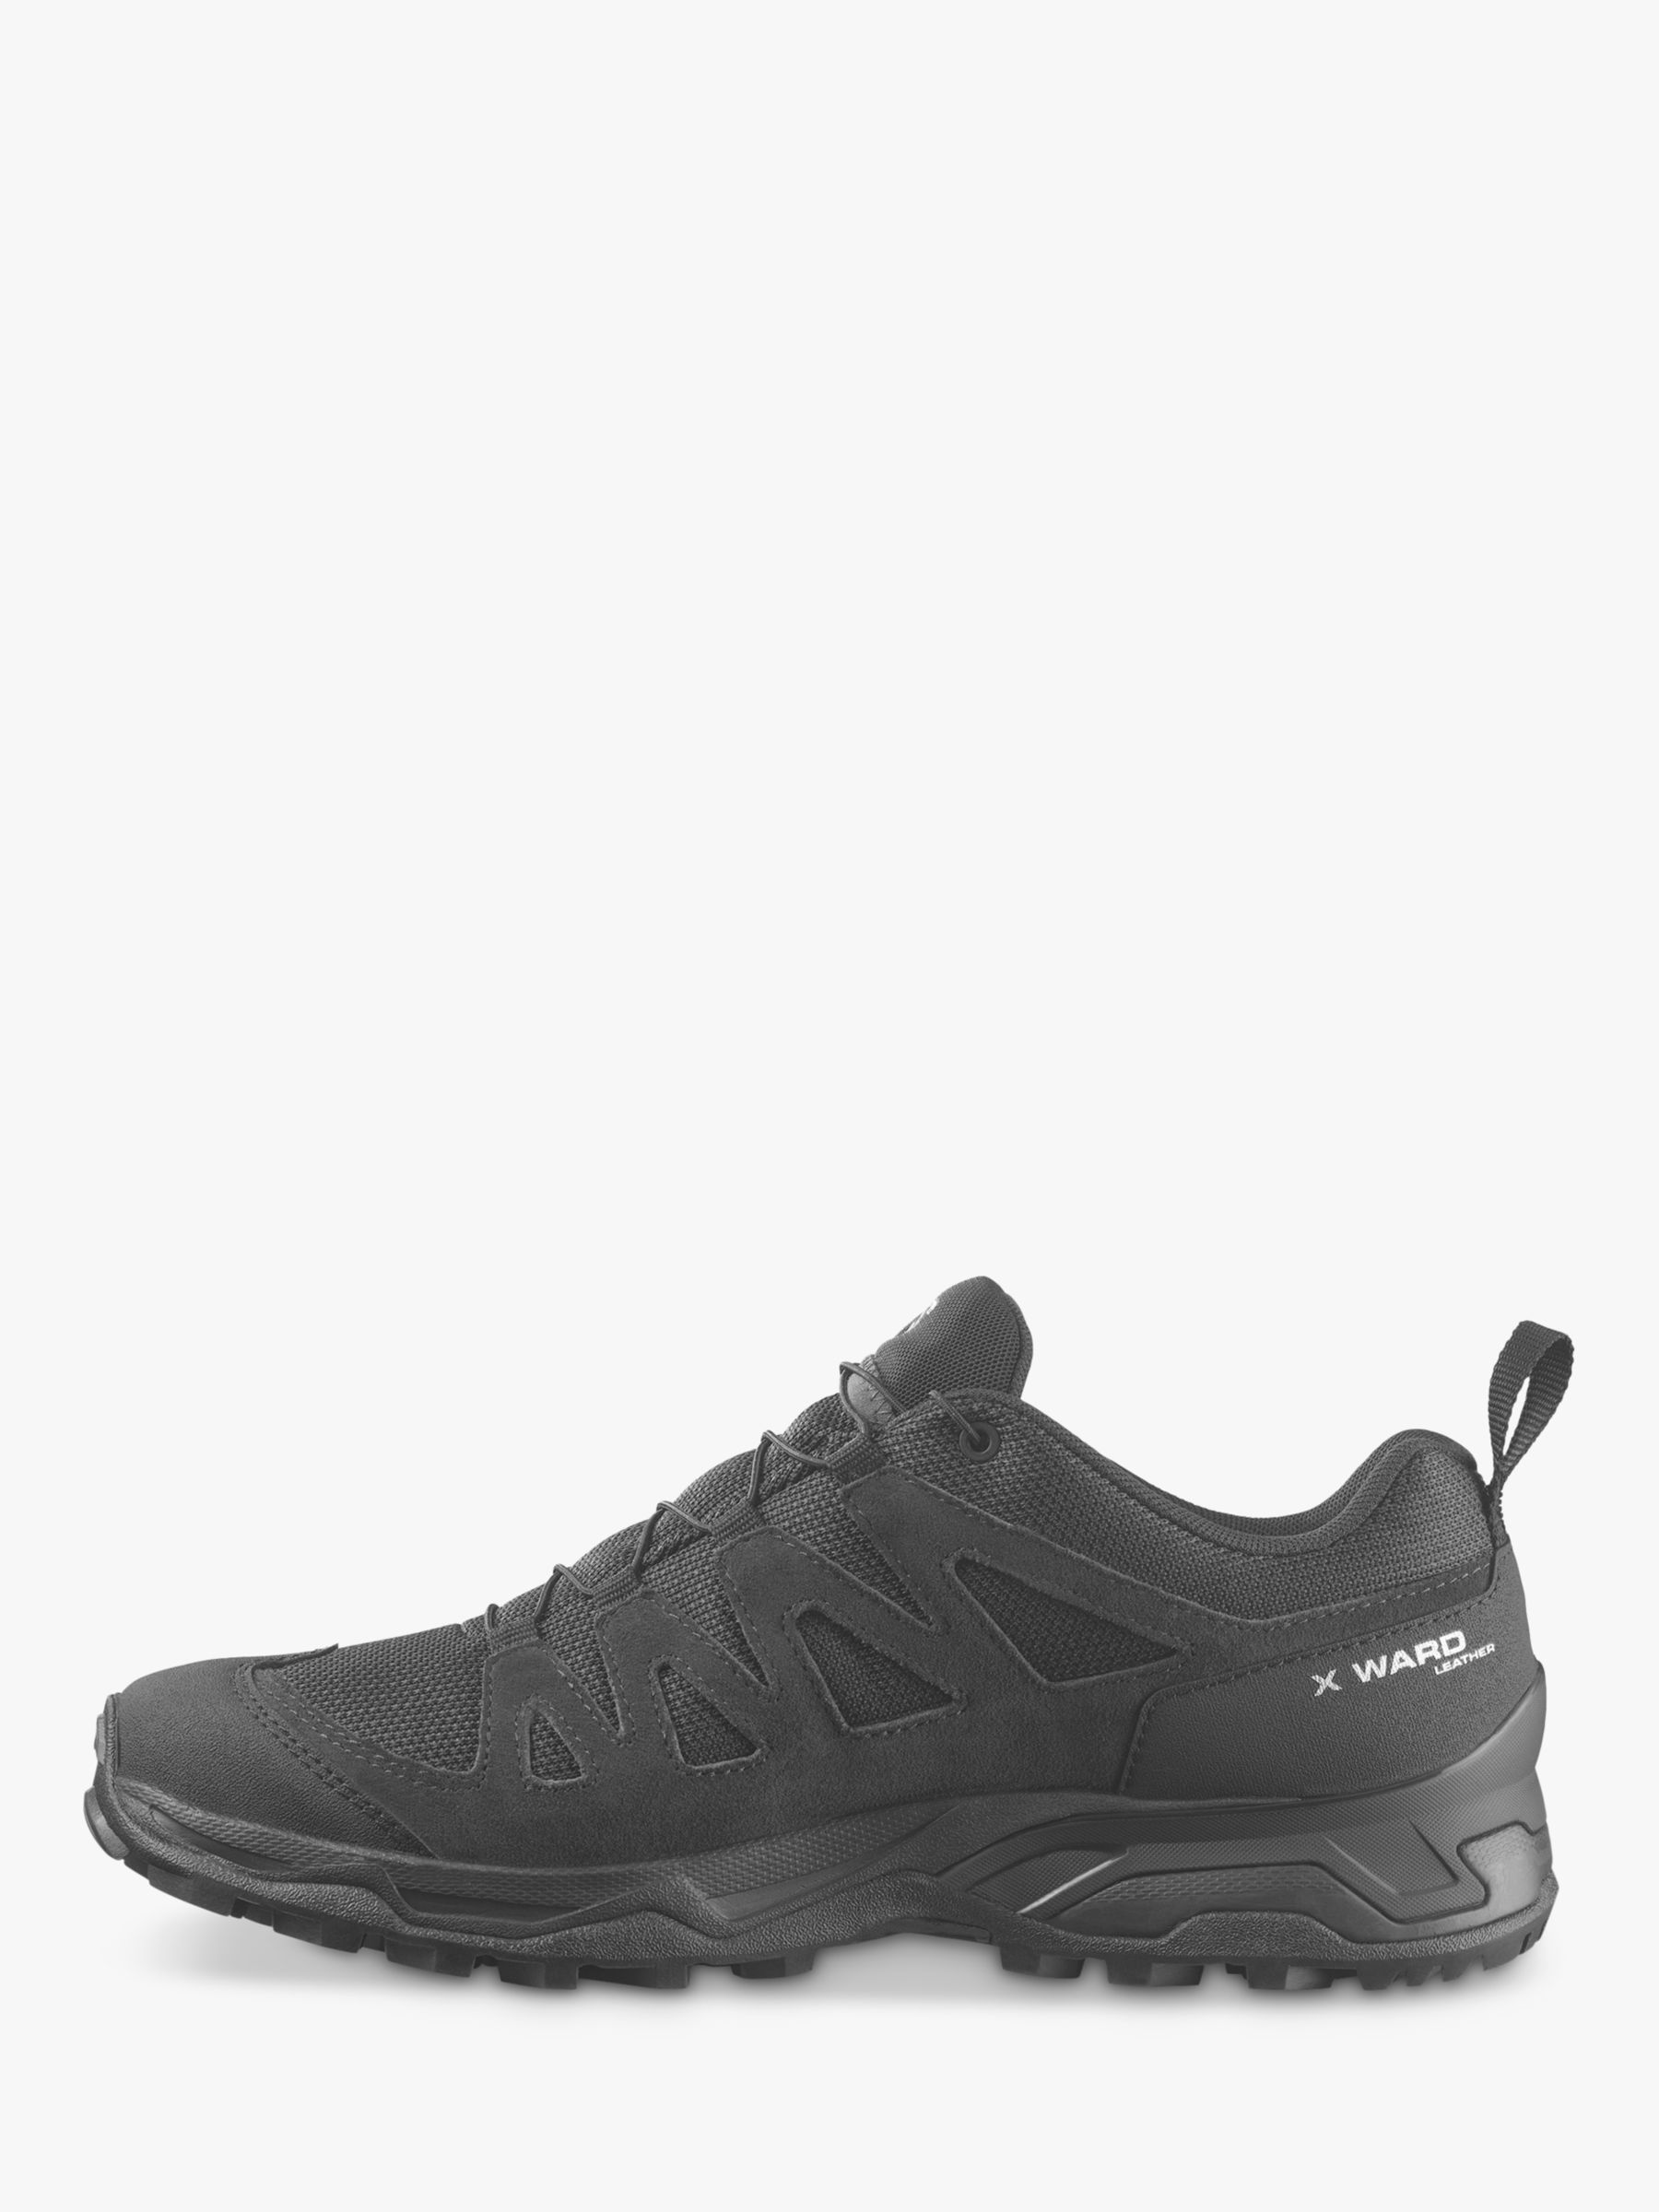 Salomon X Ward Leather Gore-Tex Men's Trail Shoes, Black, 9